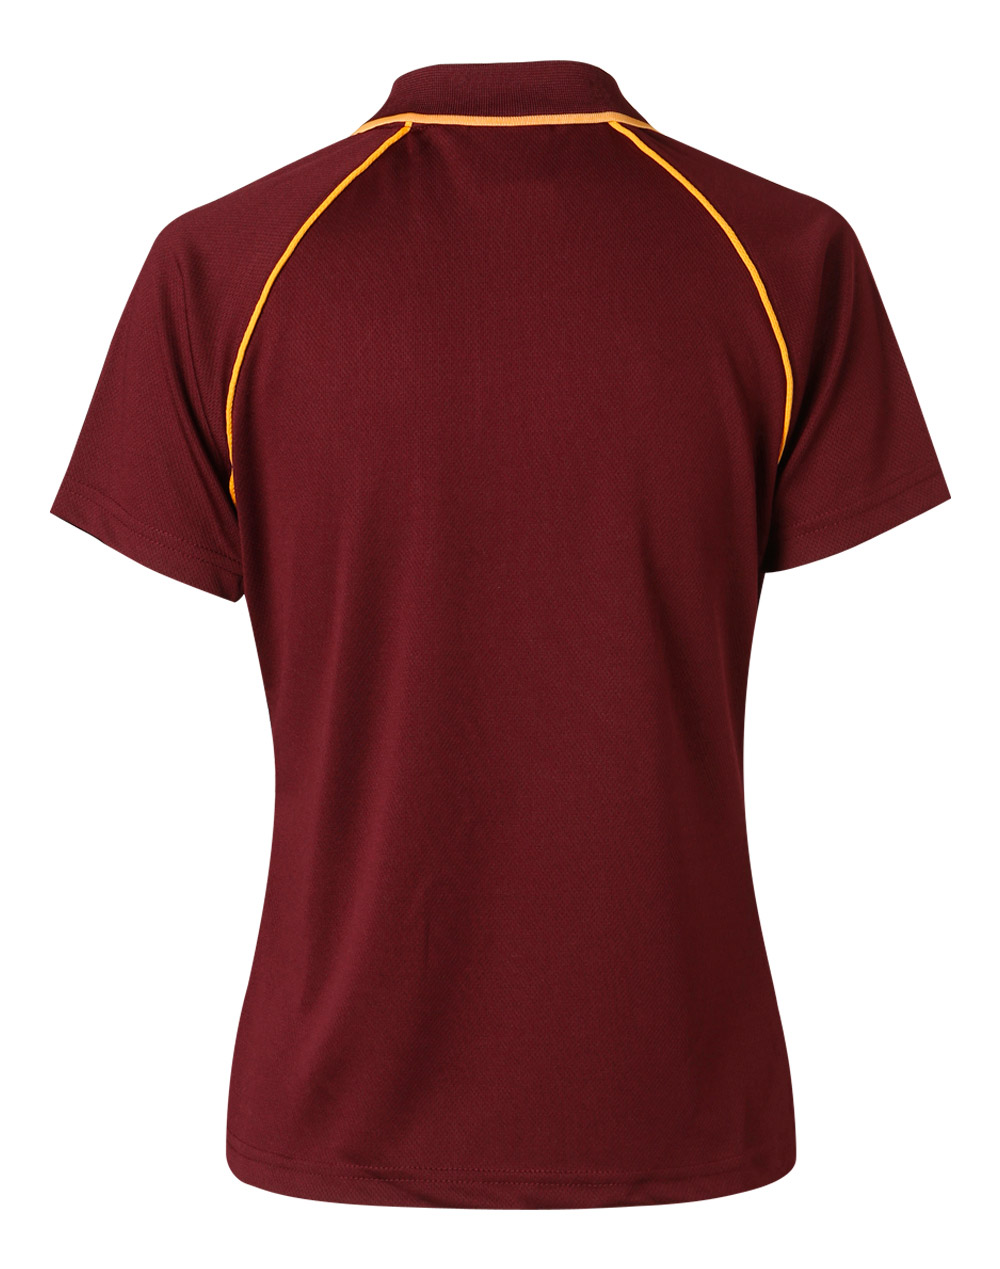 Custom Men's (Maroon, Gold) Champion Raglan Polo Shirts Online Perth Australia